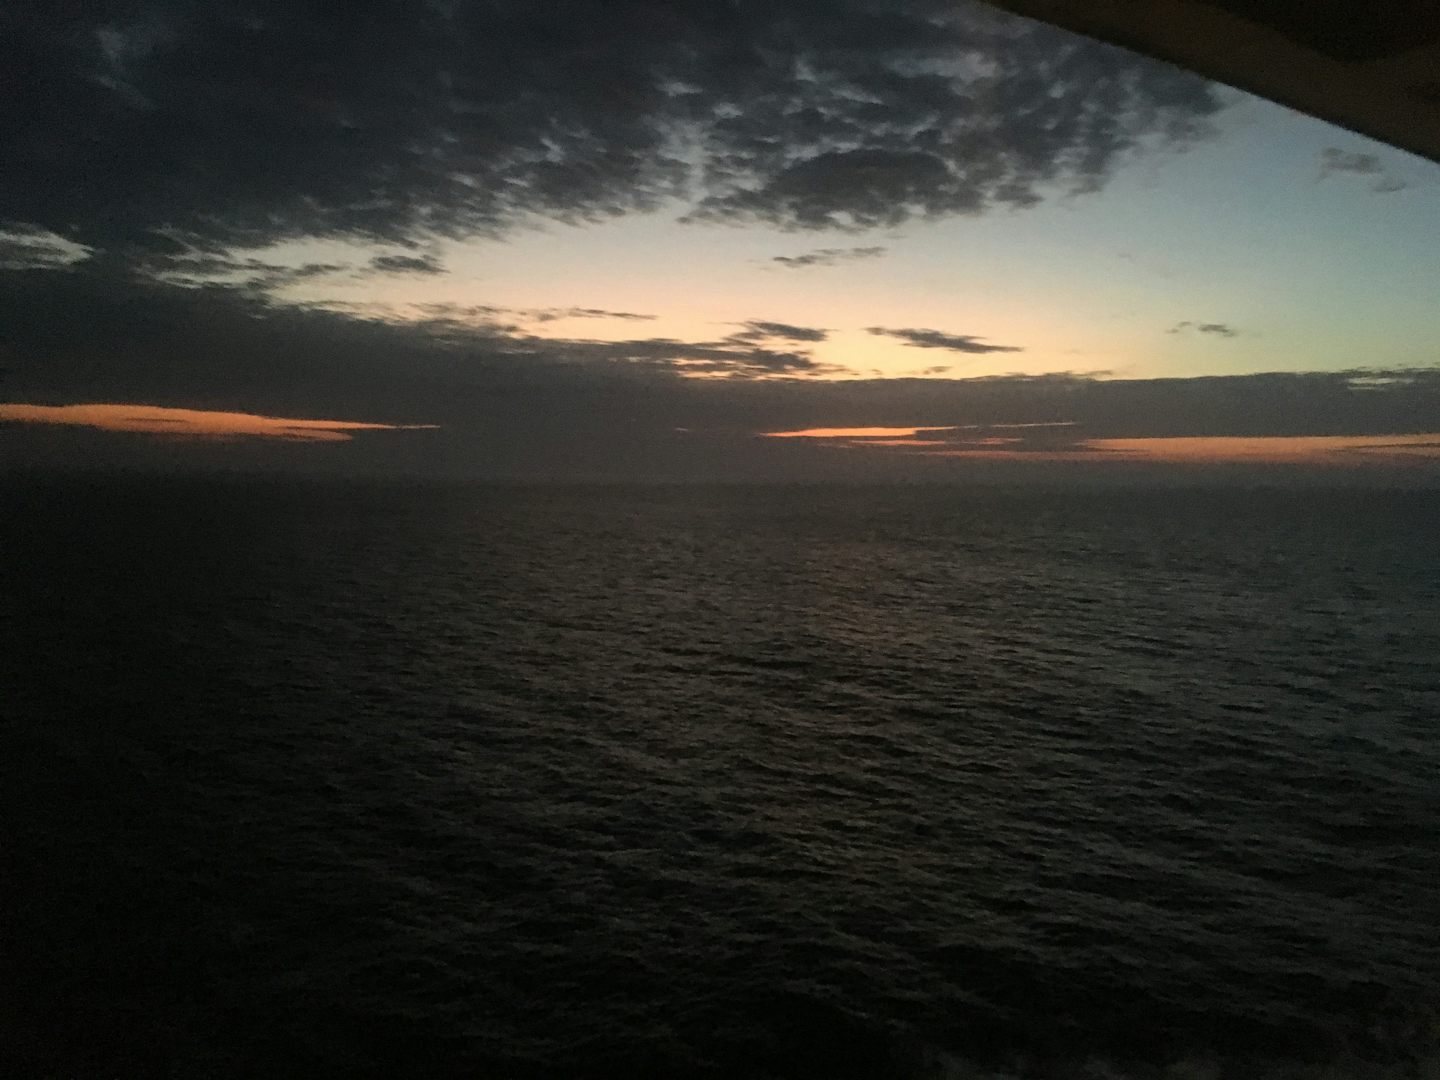 Sunrise off the coast of Peru